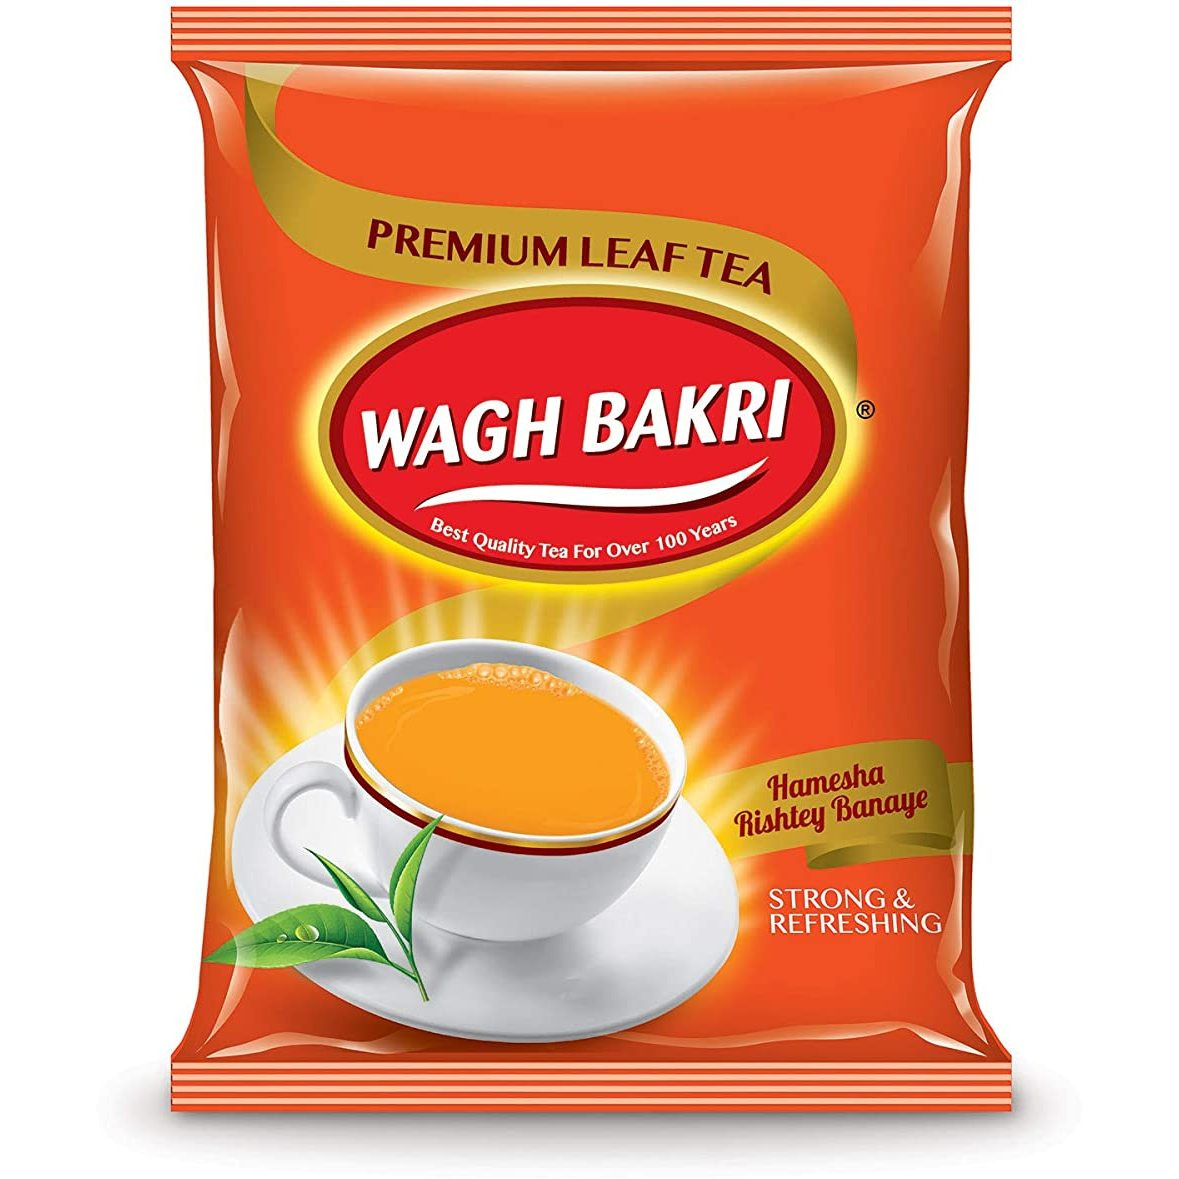 Wagh Bakri Premium Tea - 2 Lb (907 Gm)